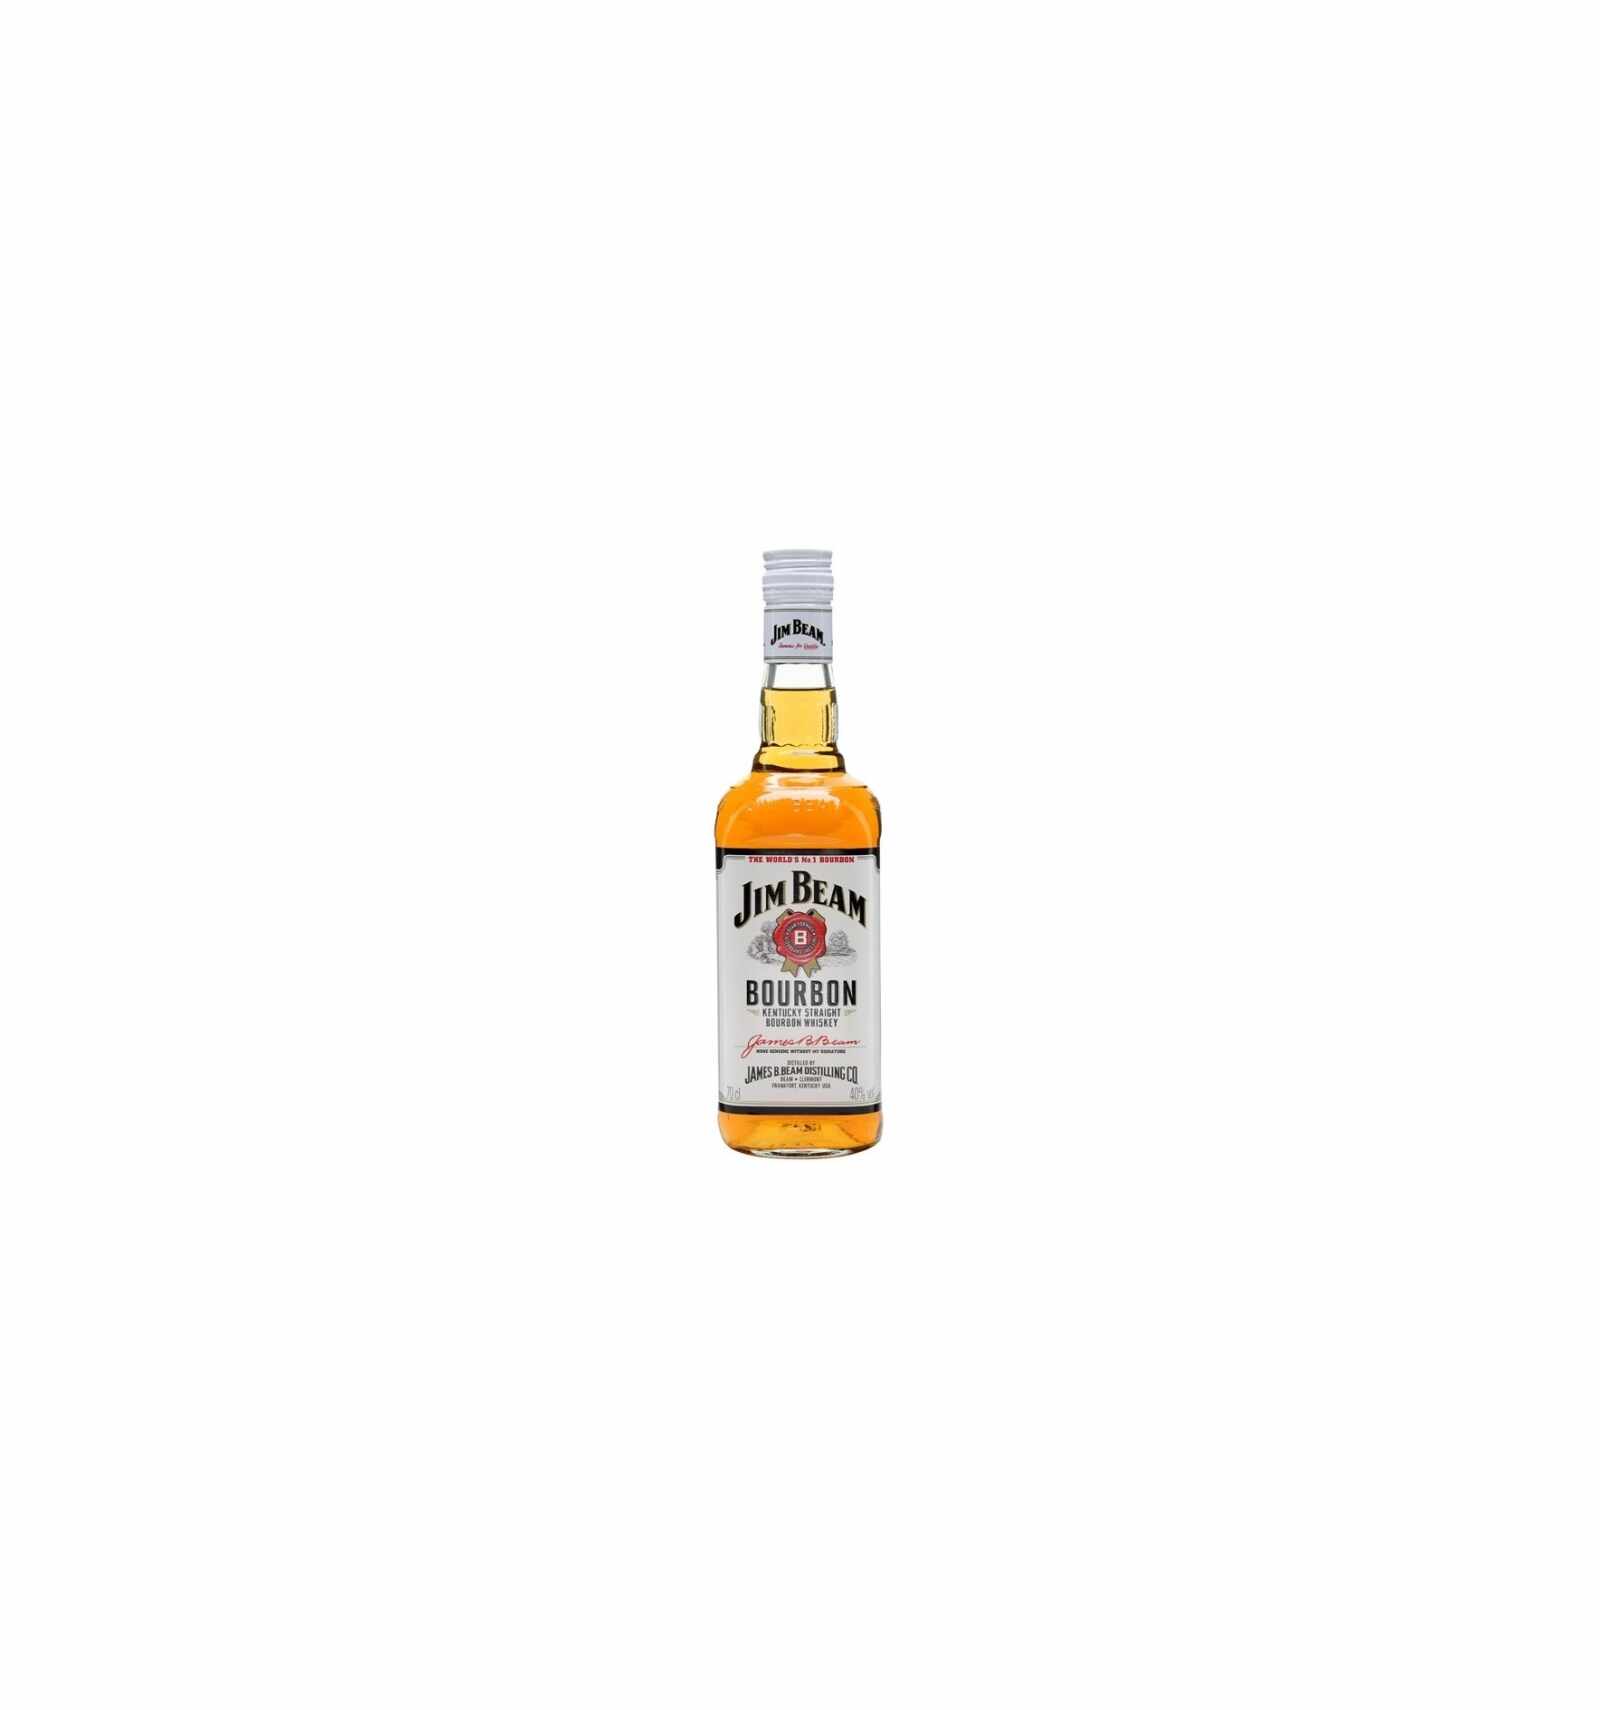 Whisky Bourbon Jim Beam White Label, 40% alc., 0.7L